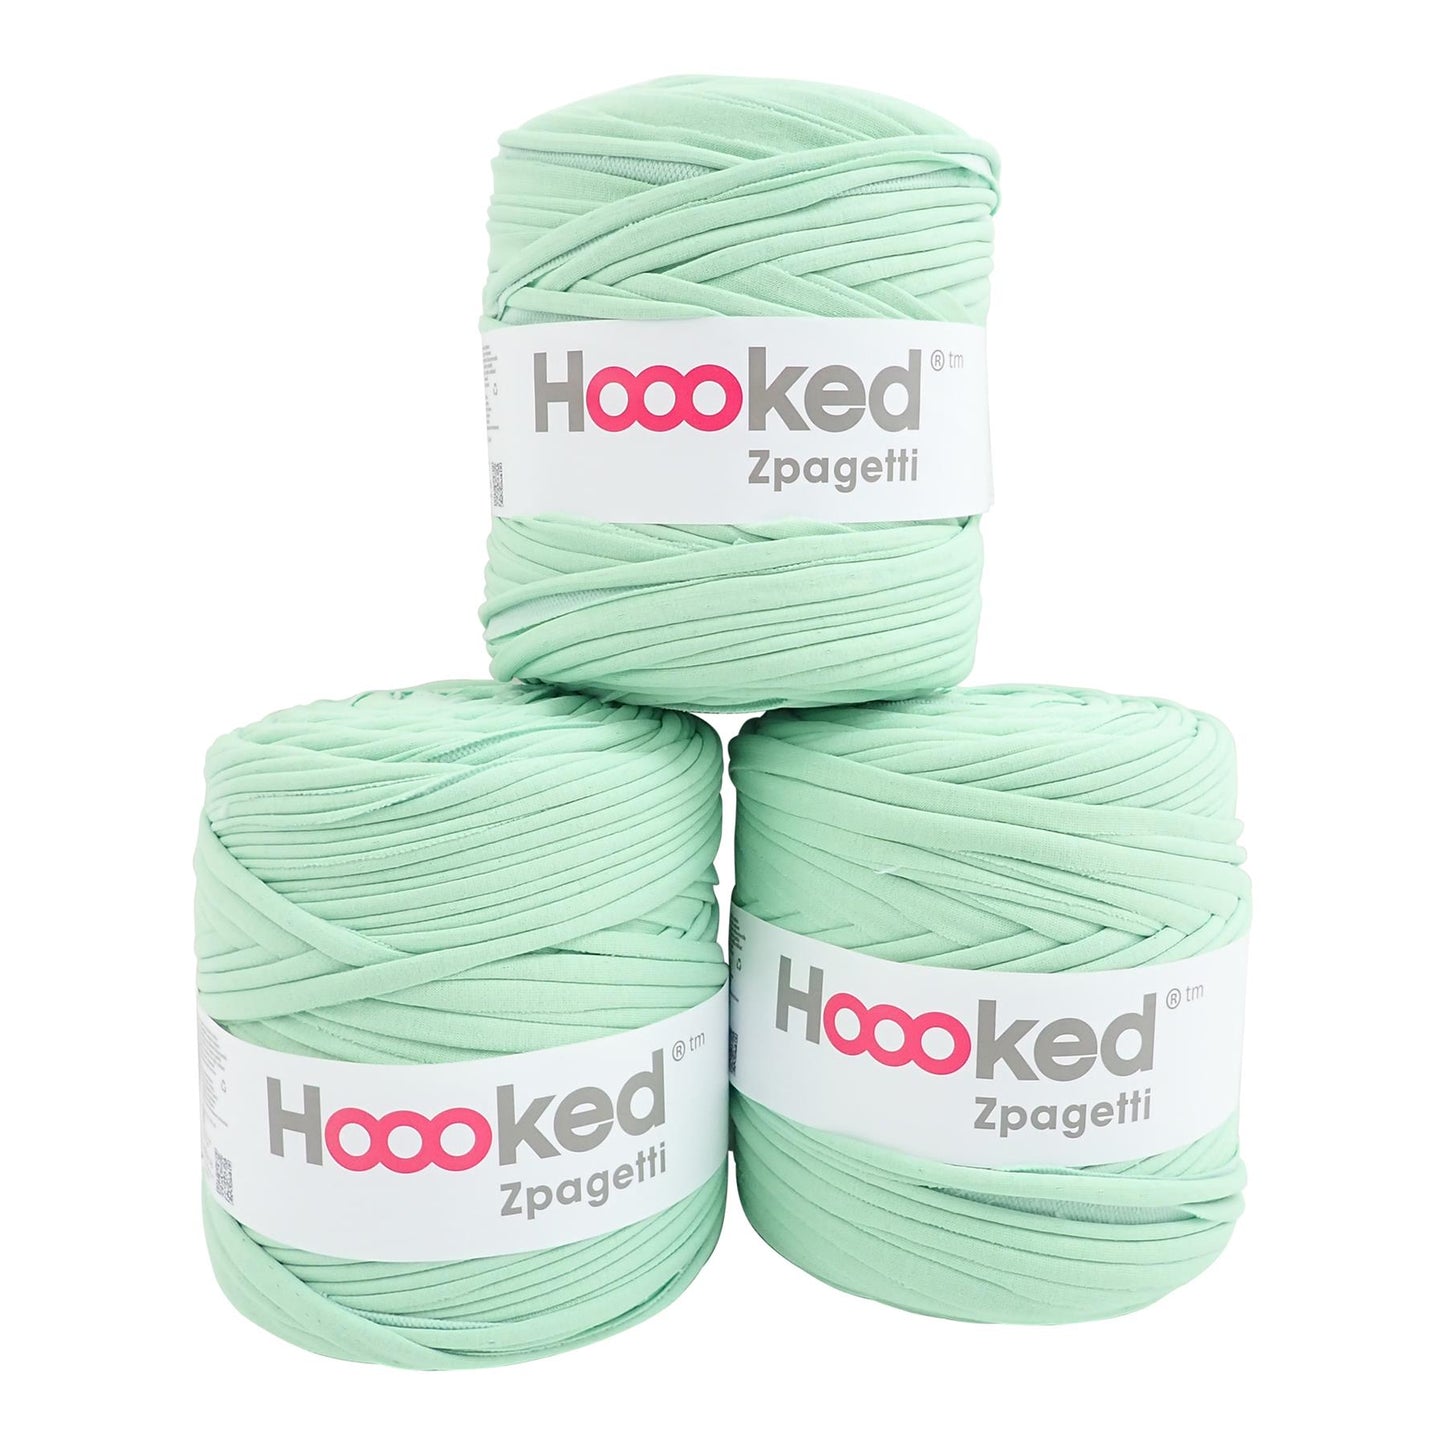 Hoooked Zpagetti Light Mint Green Cotton T-Shirt Yarn - 120M 700g (Pack of 3)